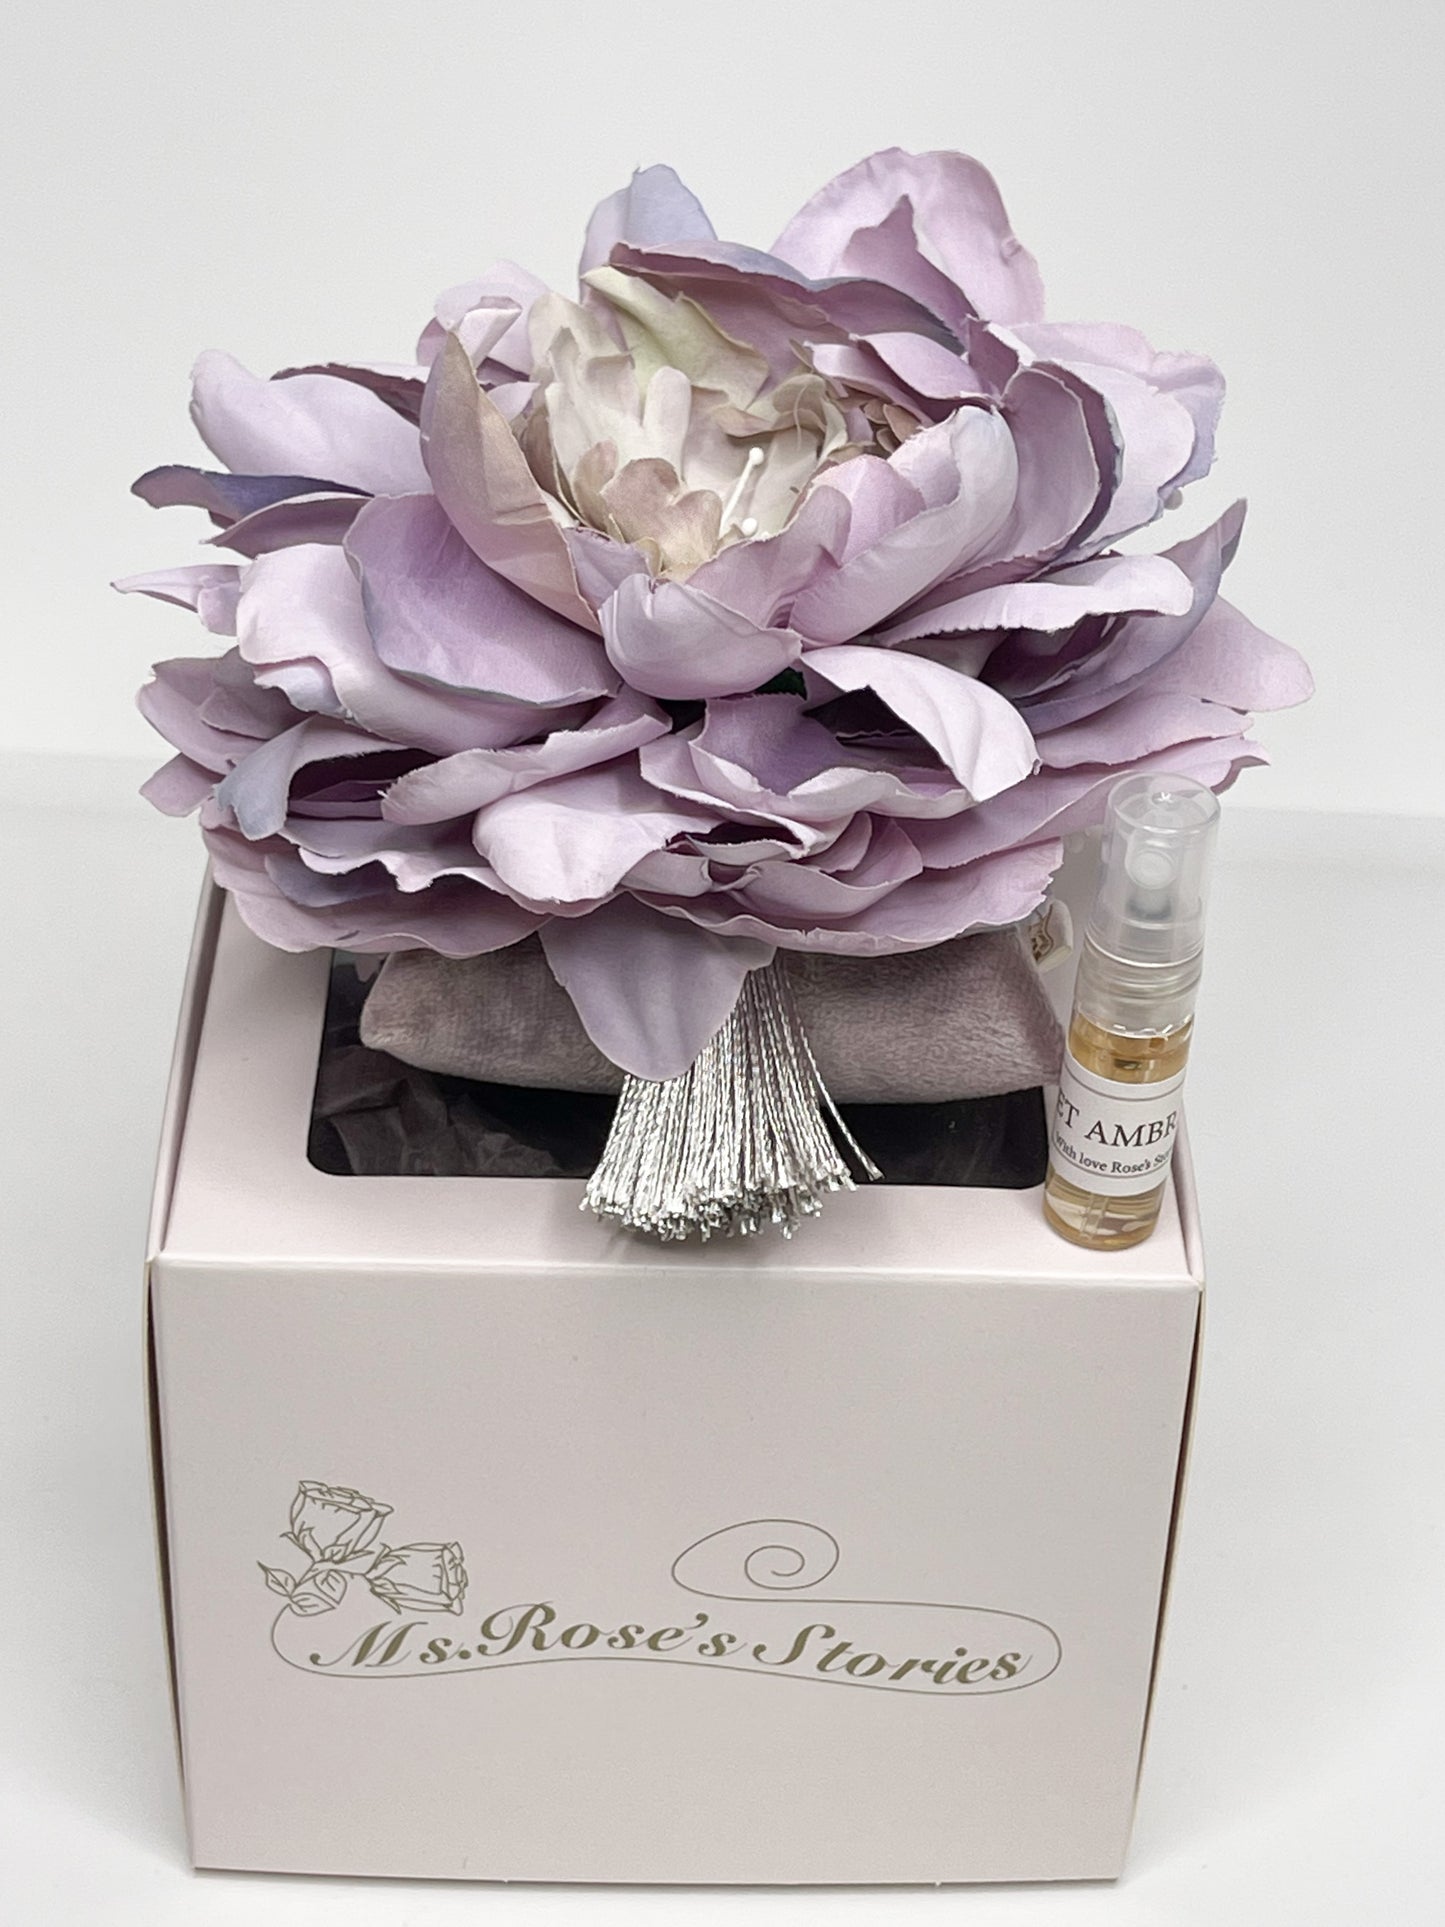 Home fragrance "Lilac peony"